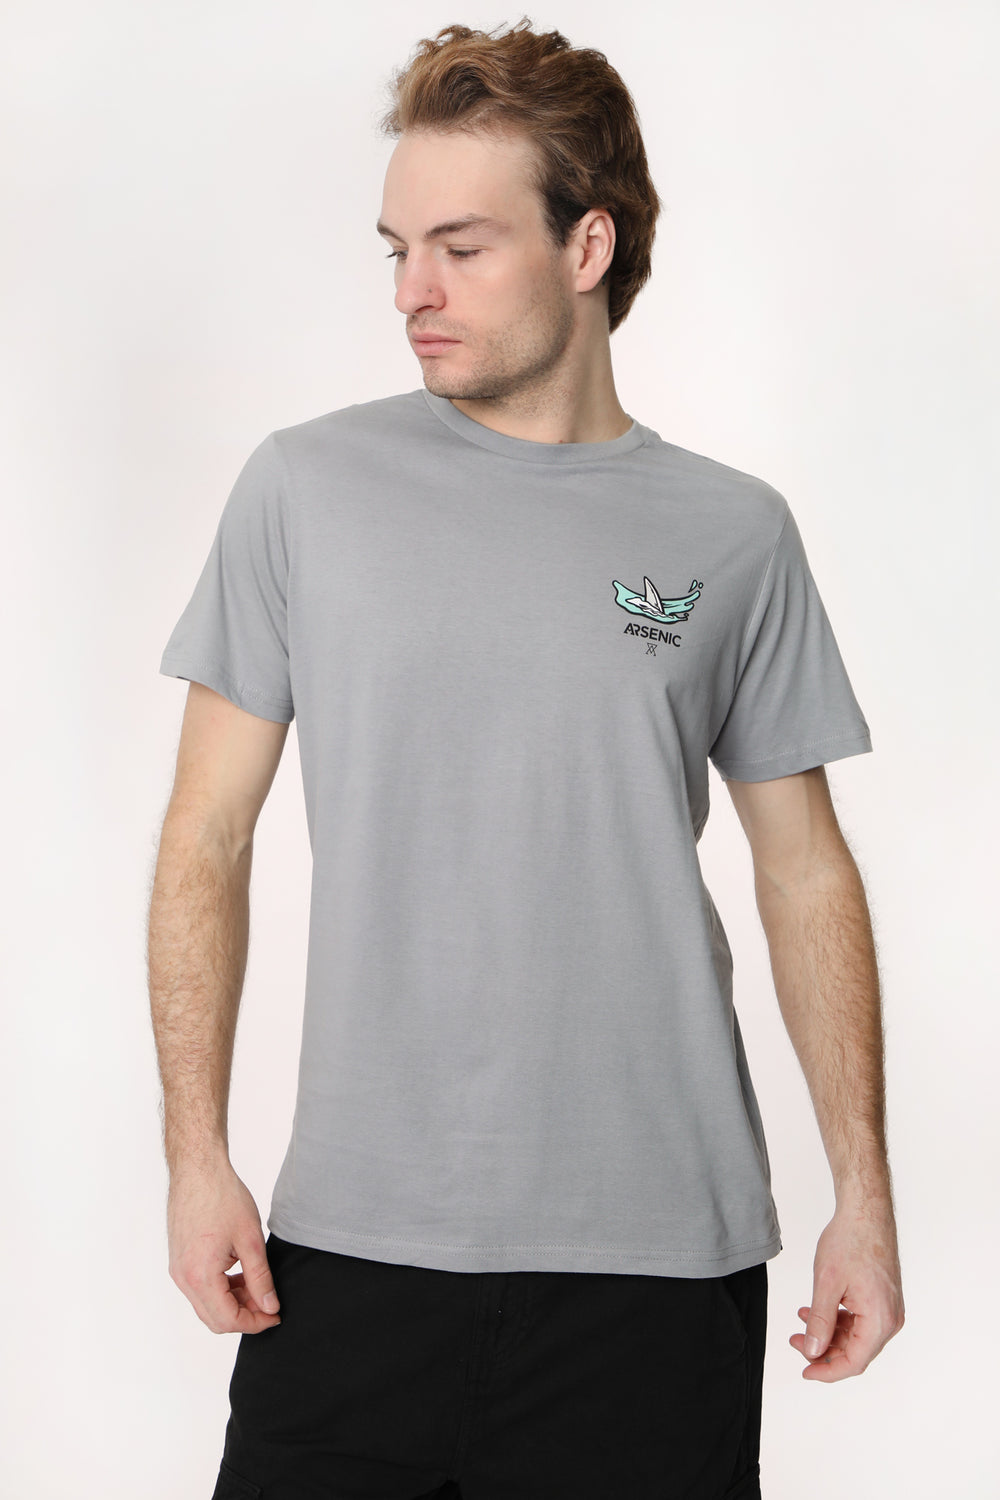 T-Shirt Imprimé Ride Or Die Arsenic Homme T-Shirt Imprimé Ride Or Die Arsenic Homme